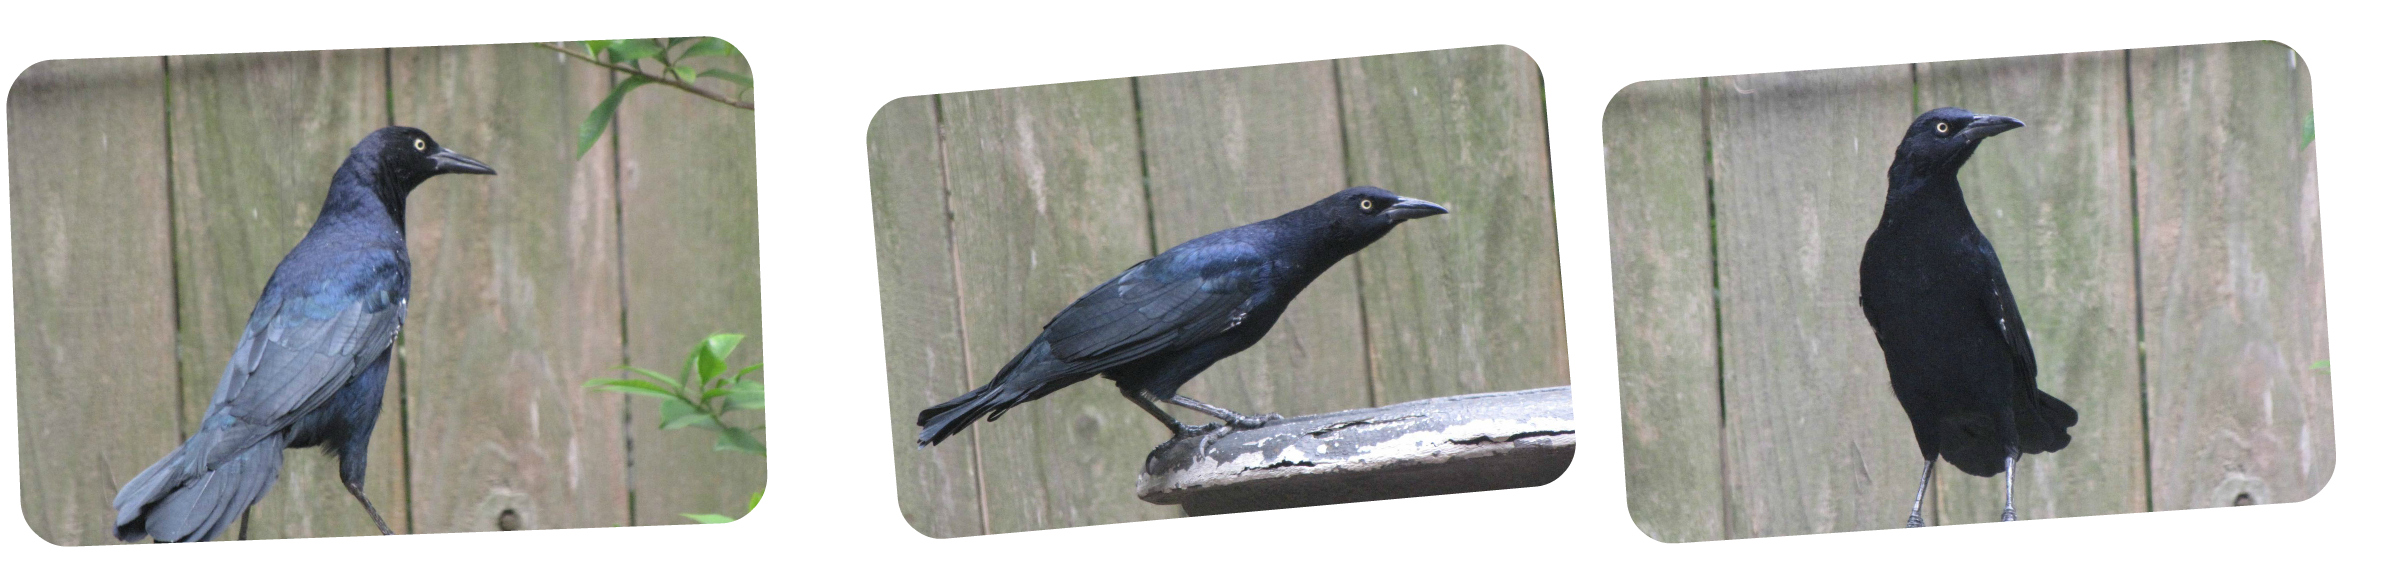 Great-tailed Black Bird